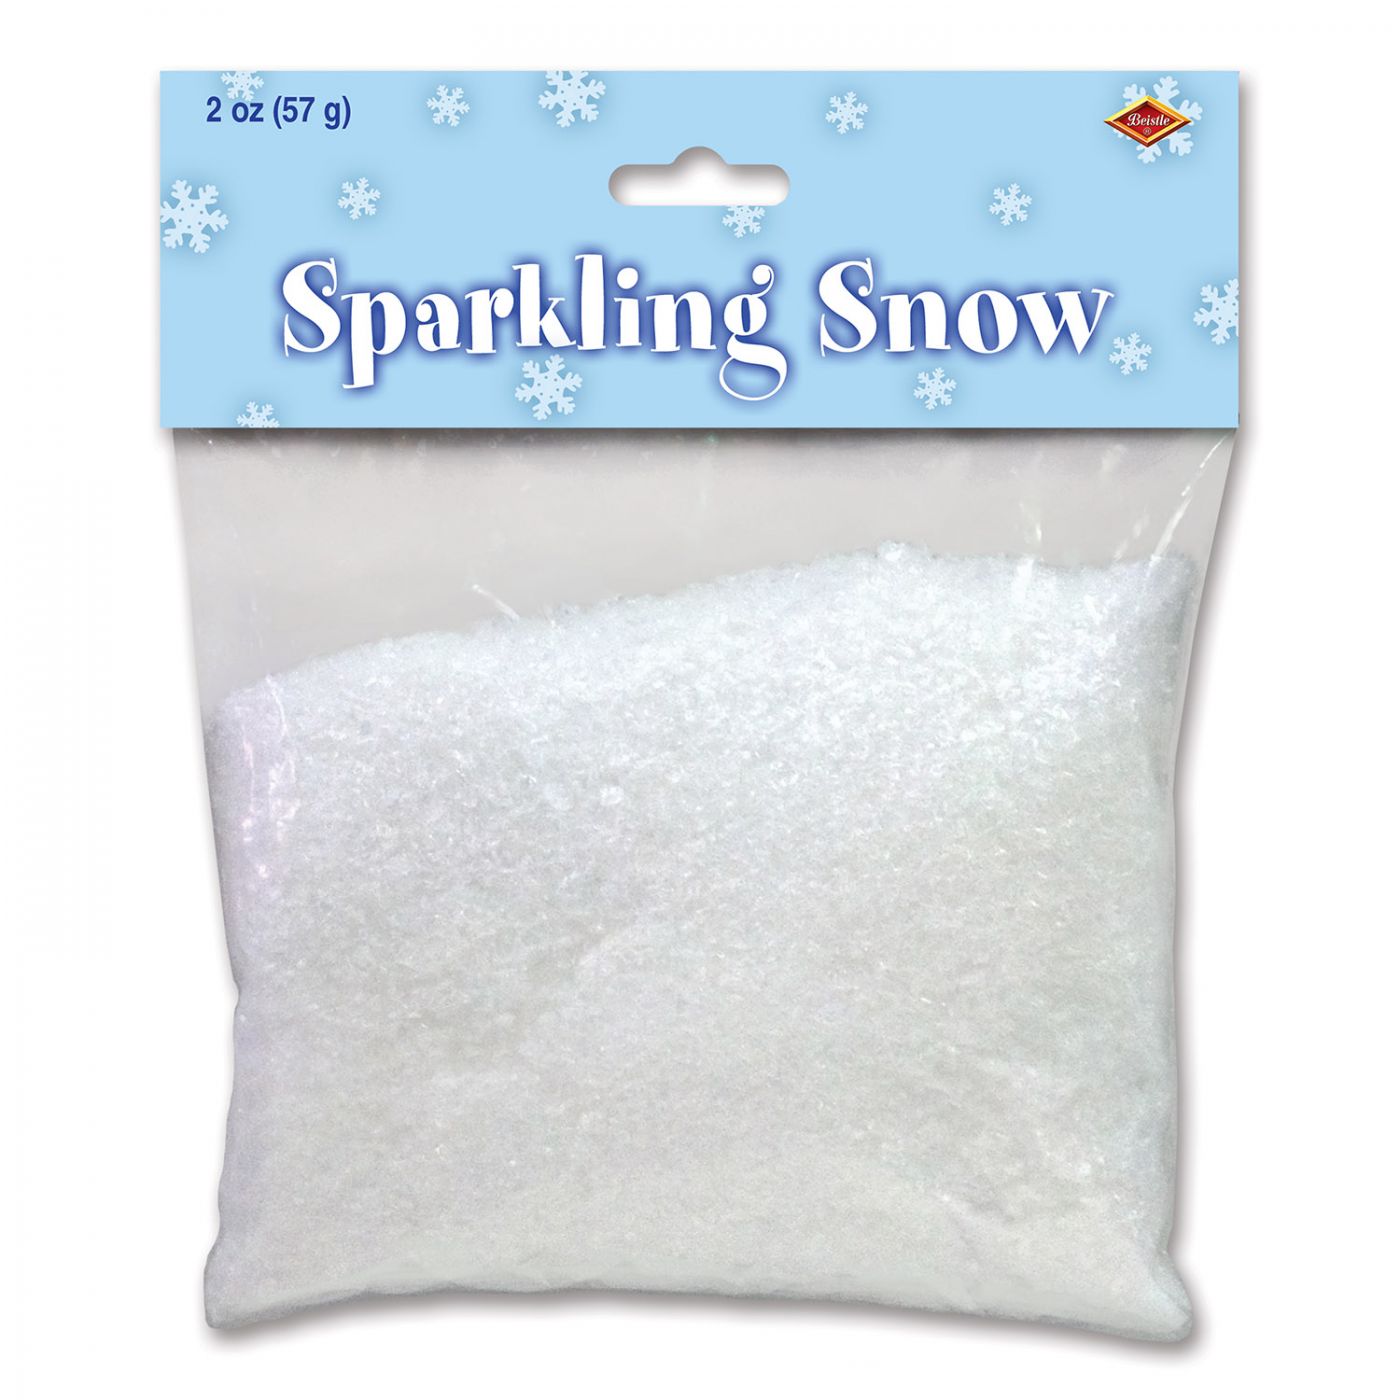 Sparkling Snow image